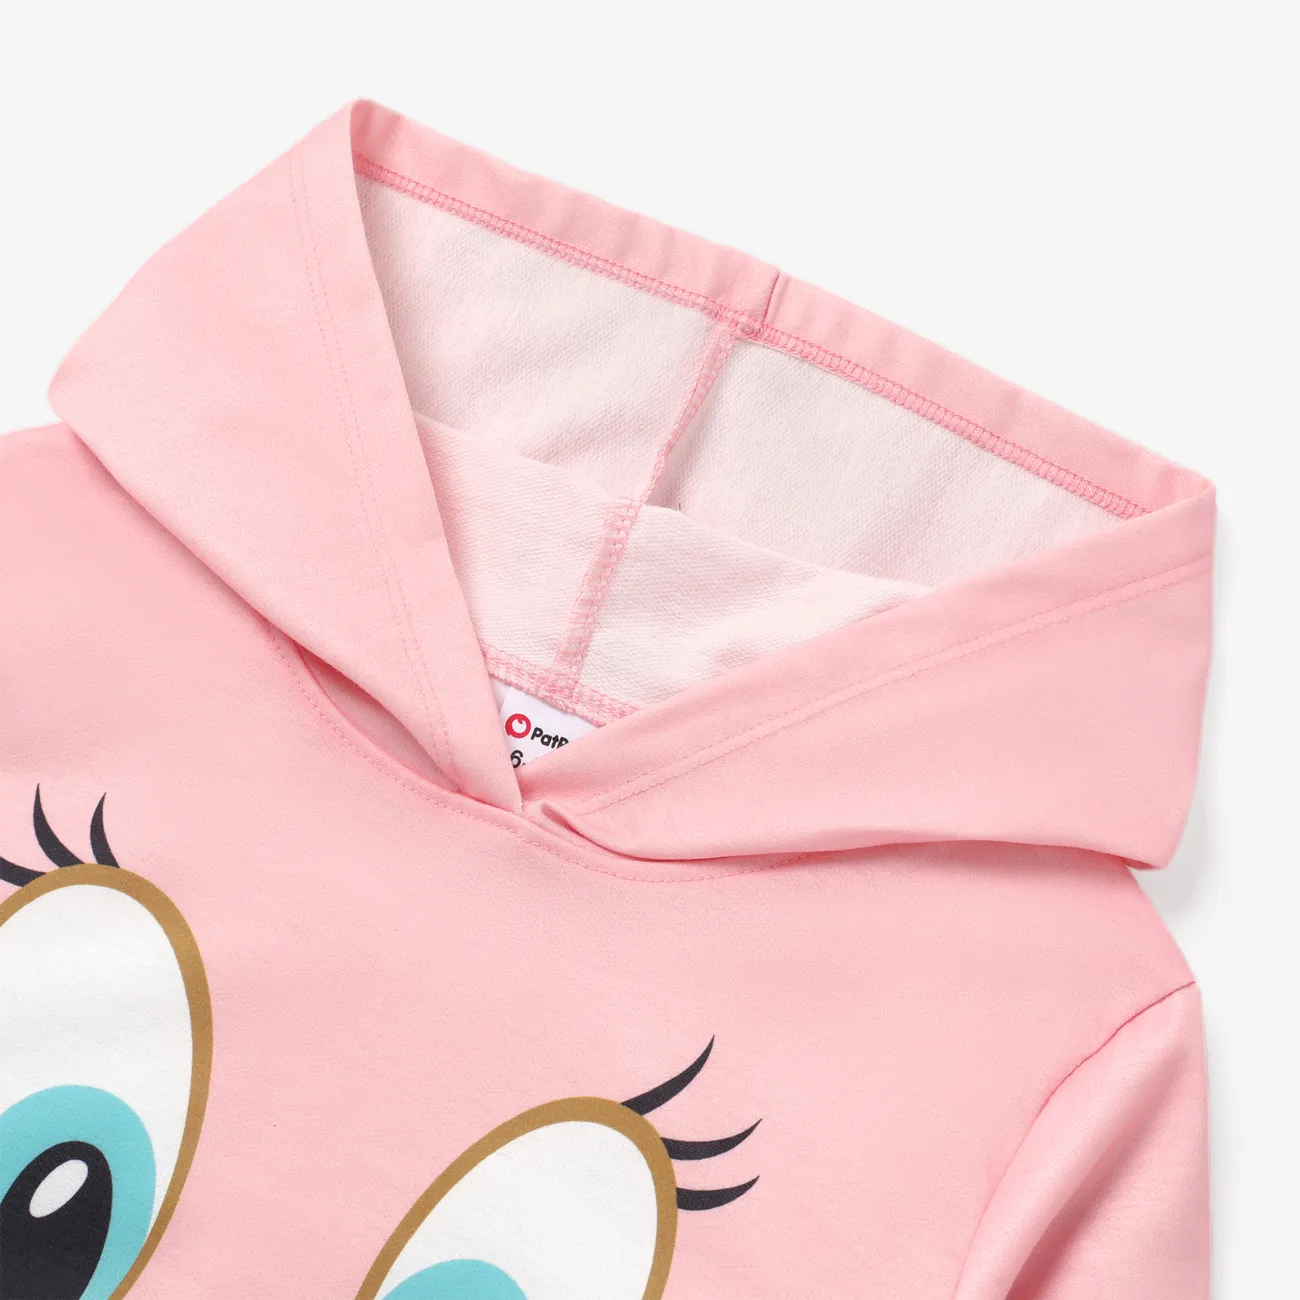 Looney Tunes Toddler/Kid Boys/Girls Character Print Long-sleeve Hooded Sweatshirt  Pink big image 1